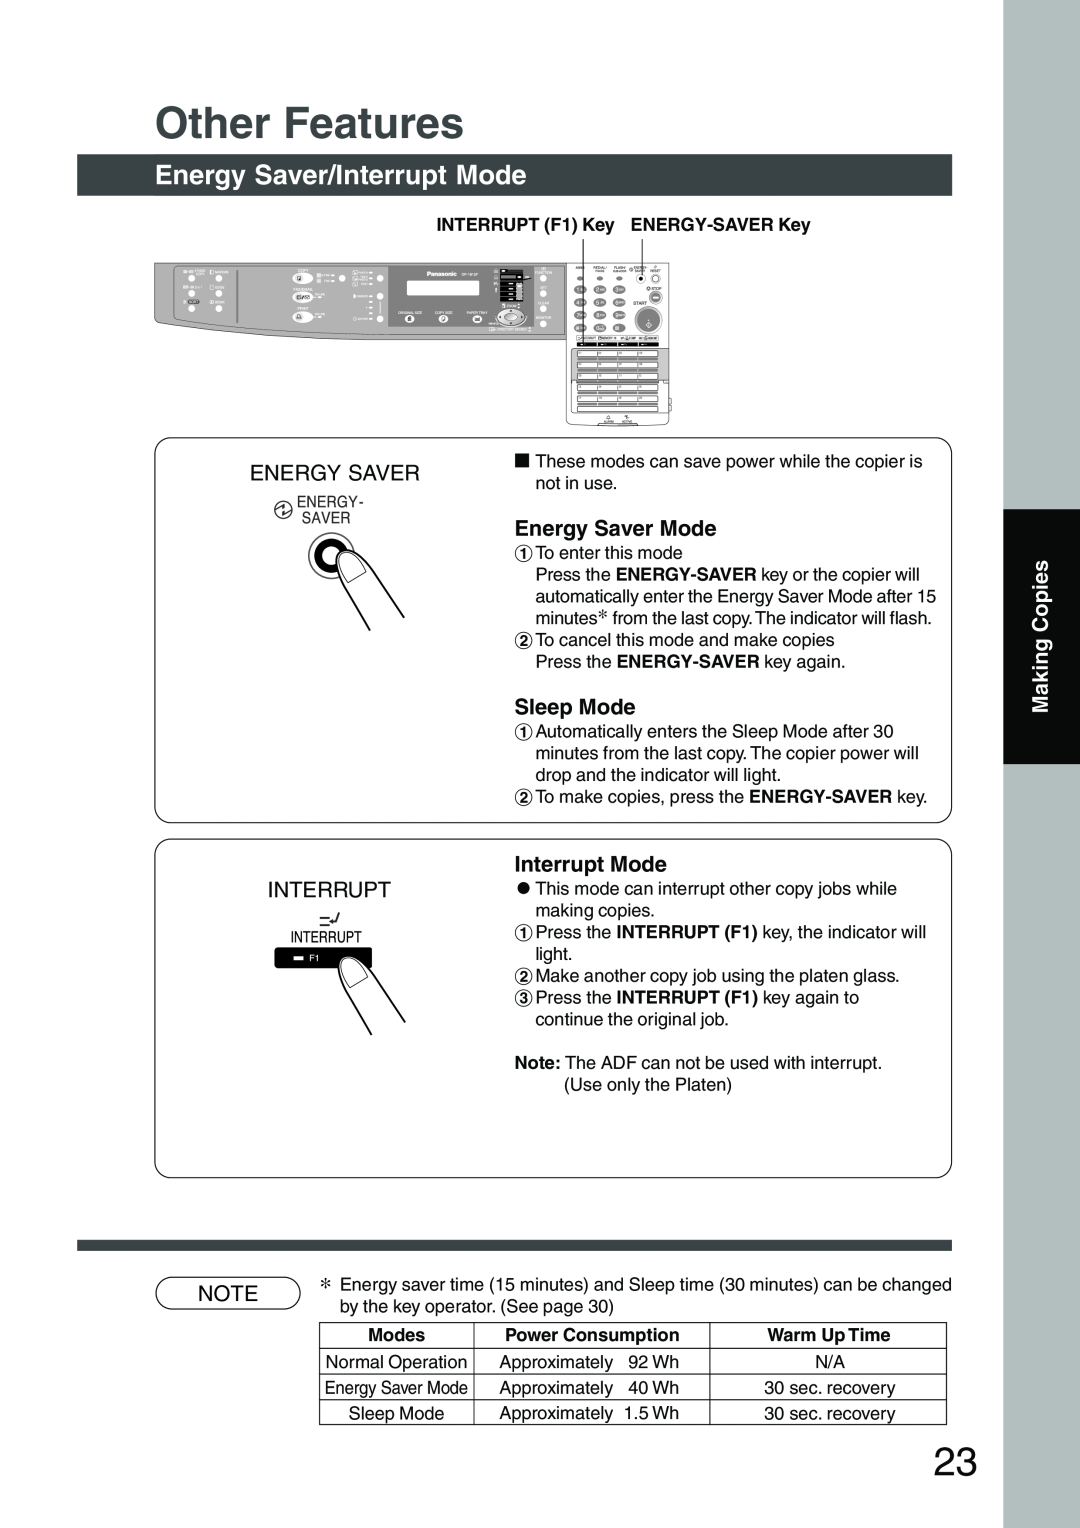 Panasonic DP-1810F manual Other Features, Energy Saver/Interrupt Mode, Energy Saver Mode, Sleep Mode, Making Copies 